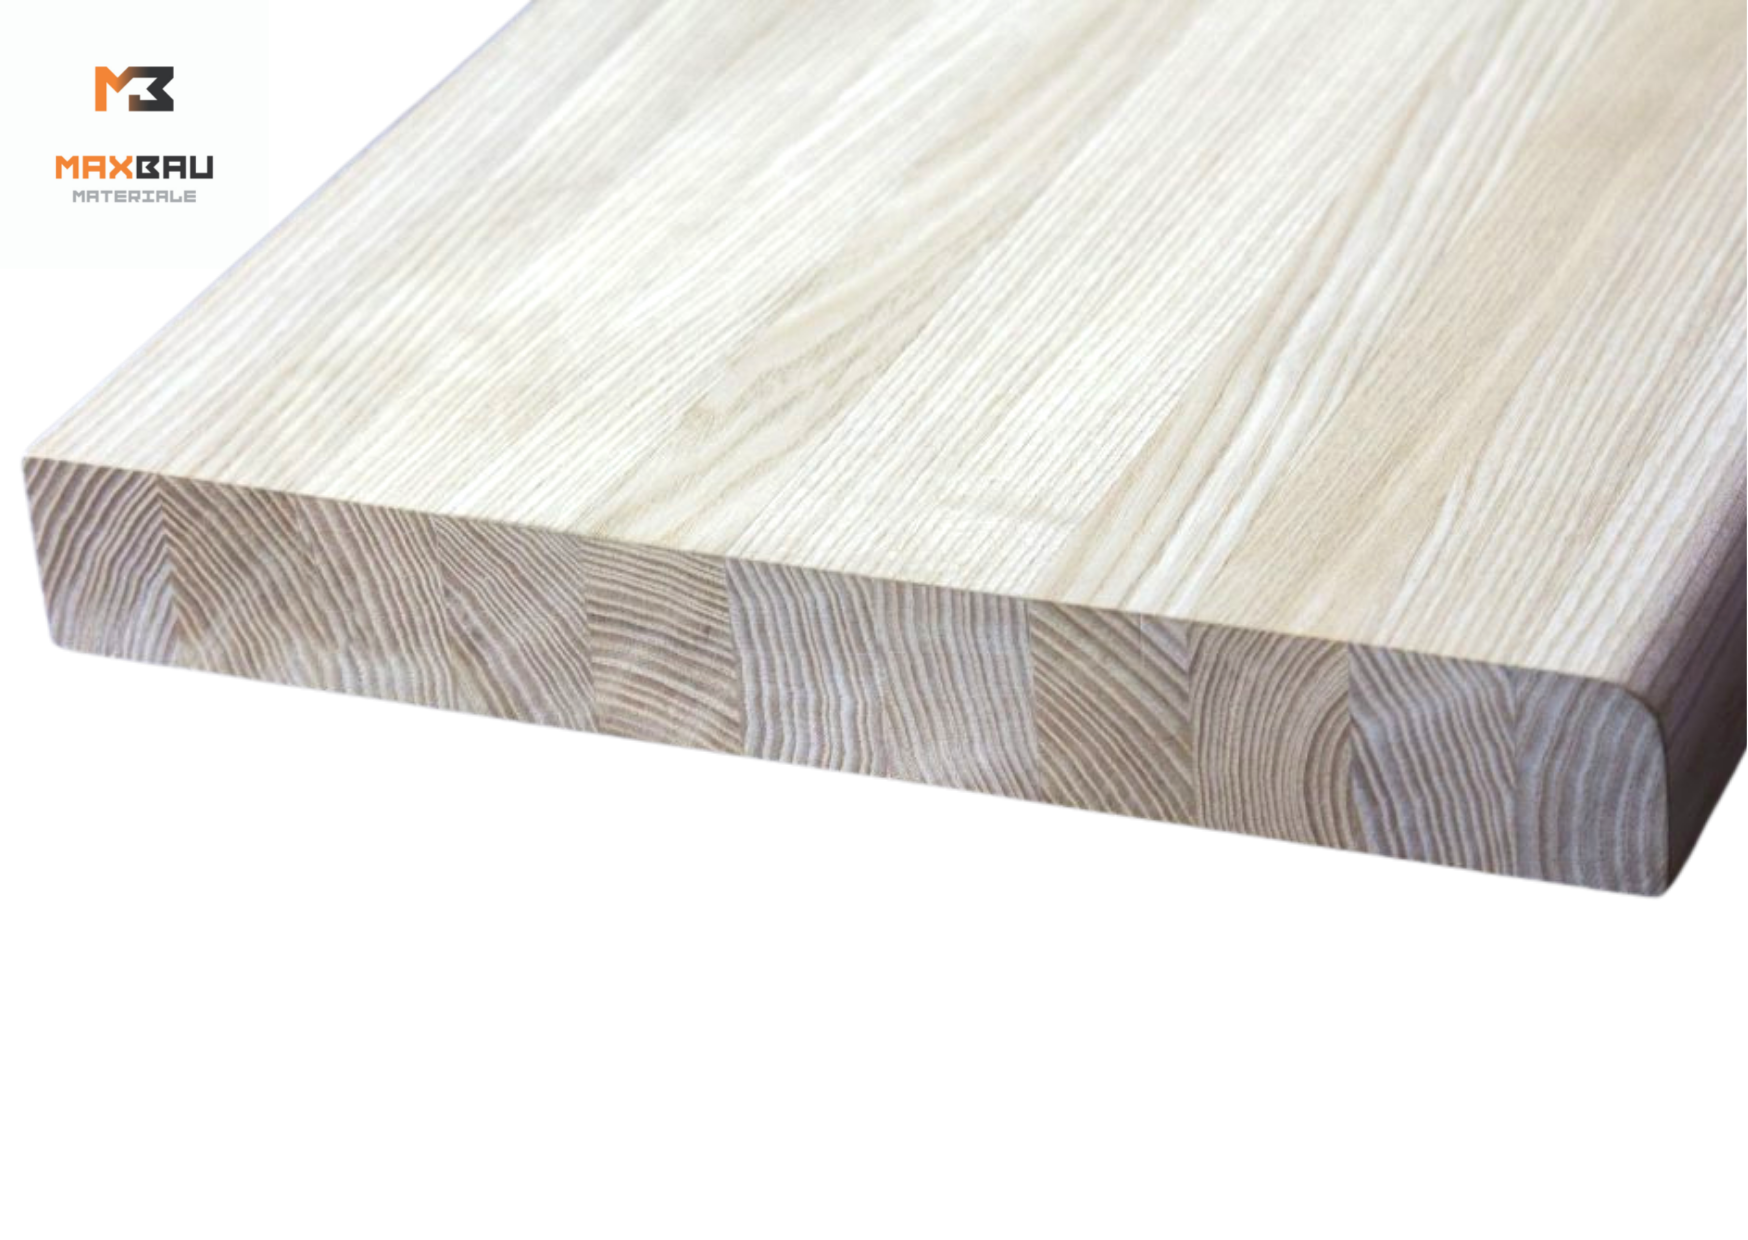 Placi din lemn incleiat - Placa de lemn incleiat MaxBau 2500 x 300 x 28 mm Clasa AB, maxbau.ro